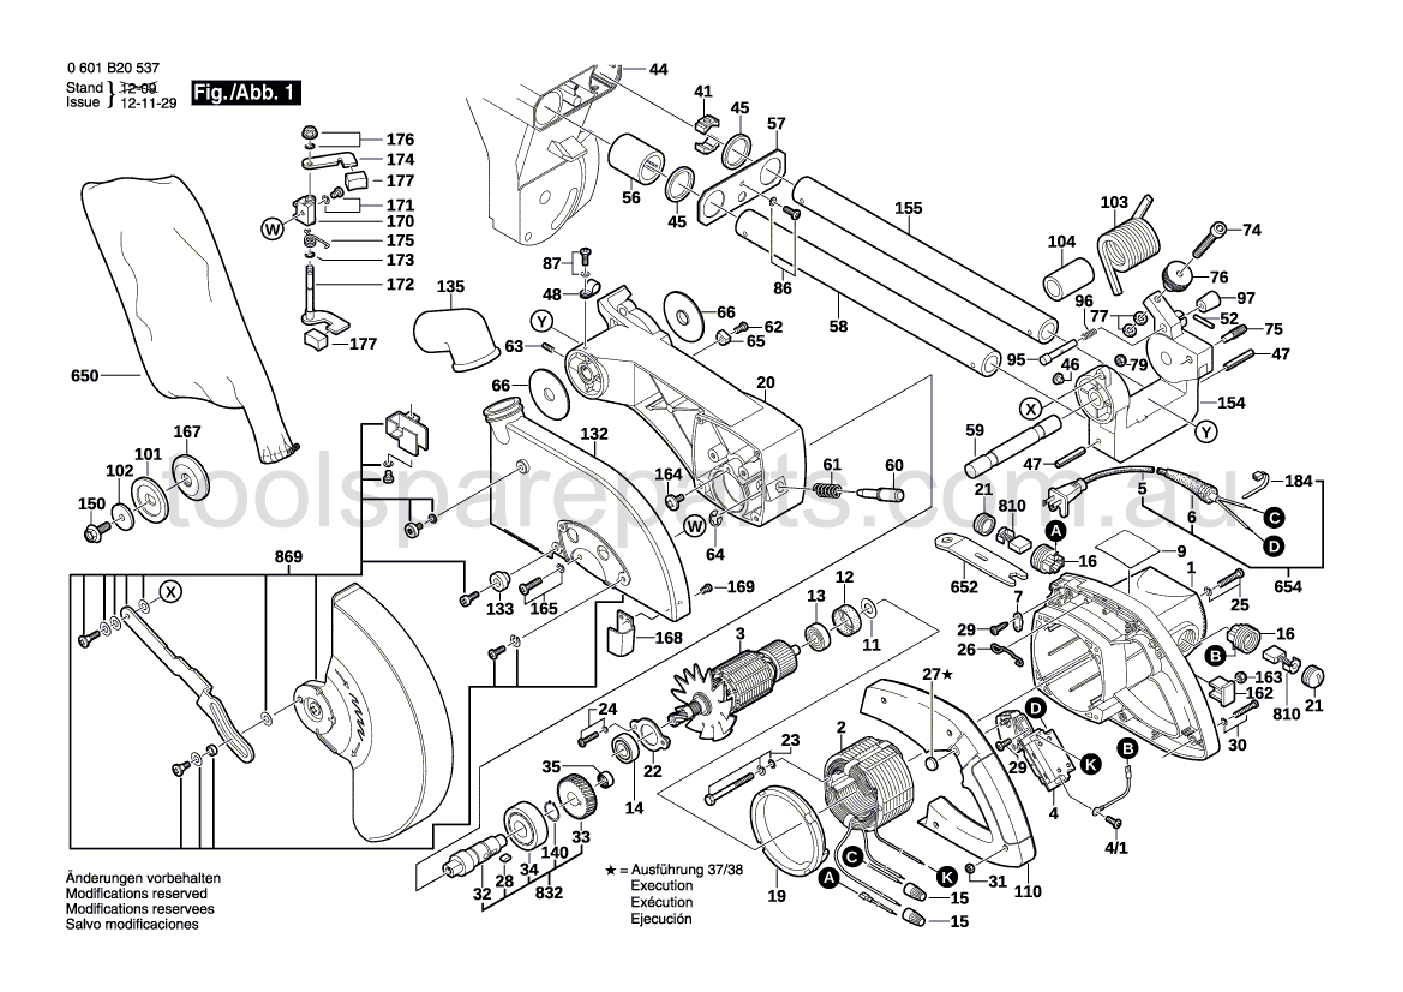 Bosch GCM 10 S 0601B20537  Diagram 1